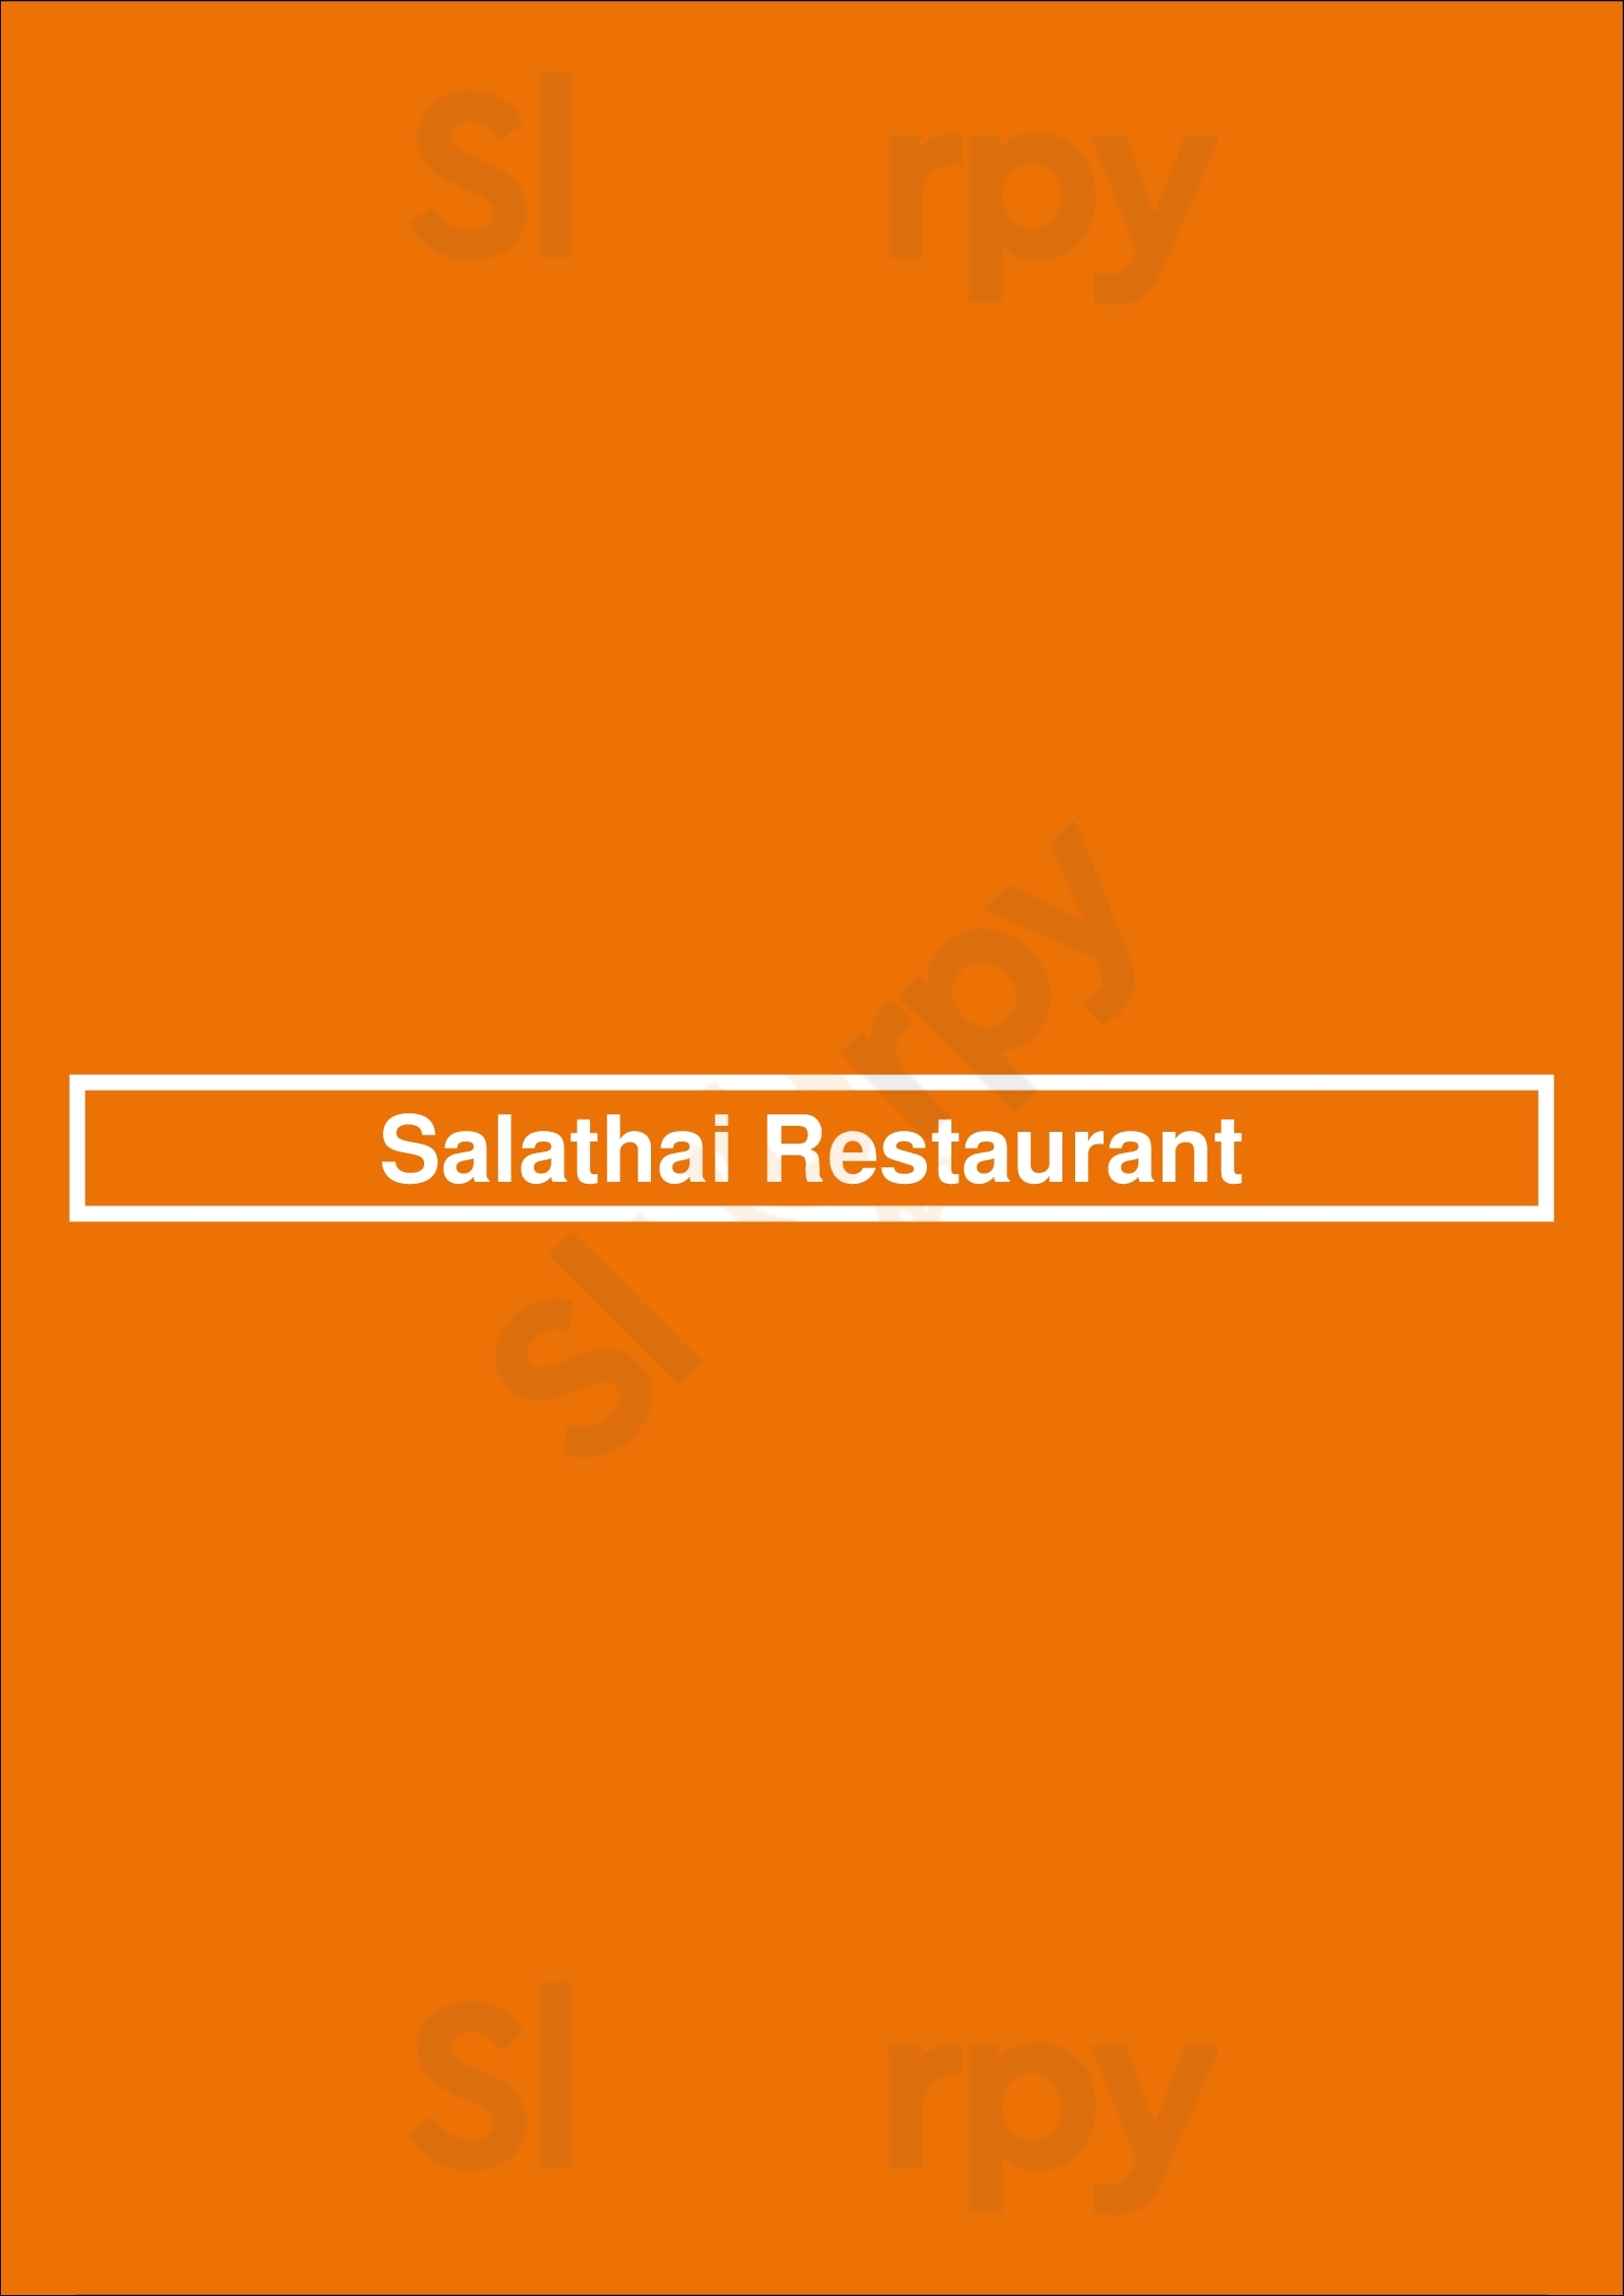 Salathai Restaurant Los Angeles Menu - 1